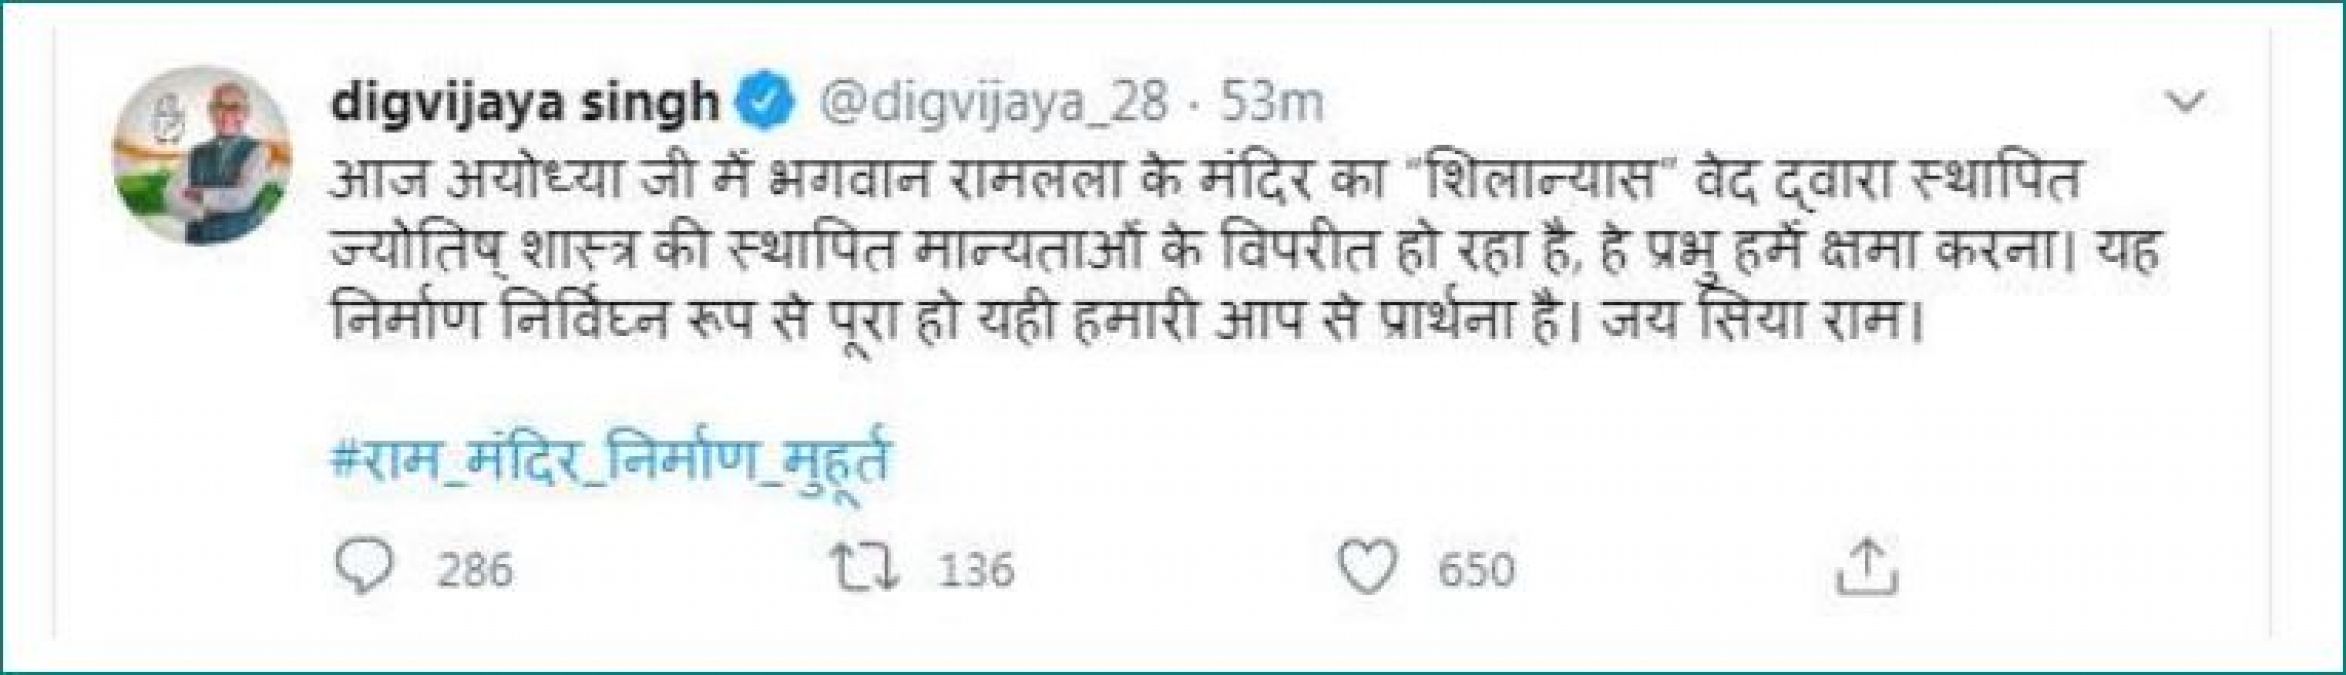 Owaisi's tweet went viral before the Ram Temple Bhoomi Pujan